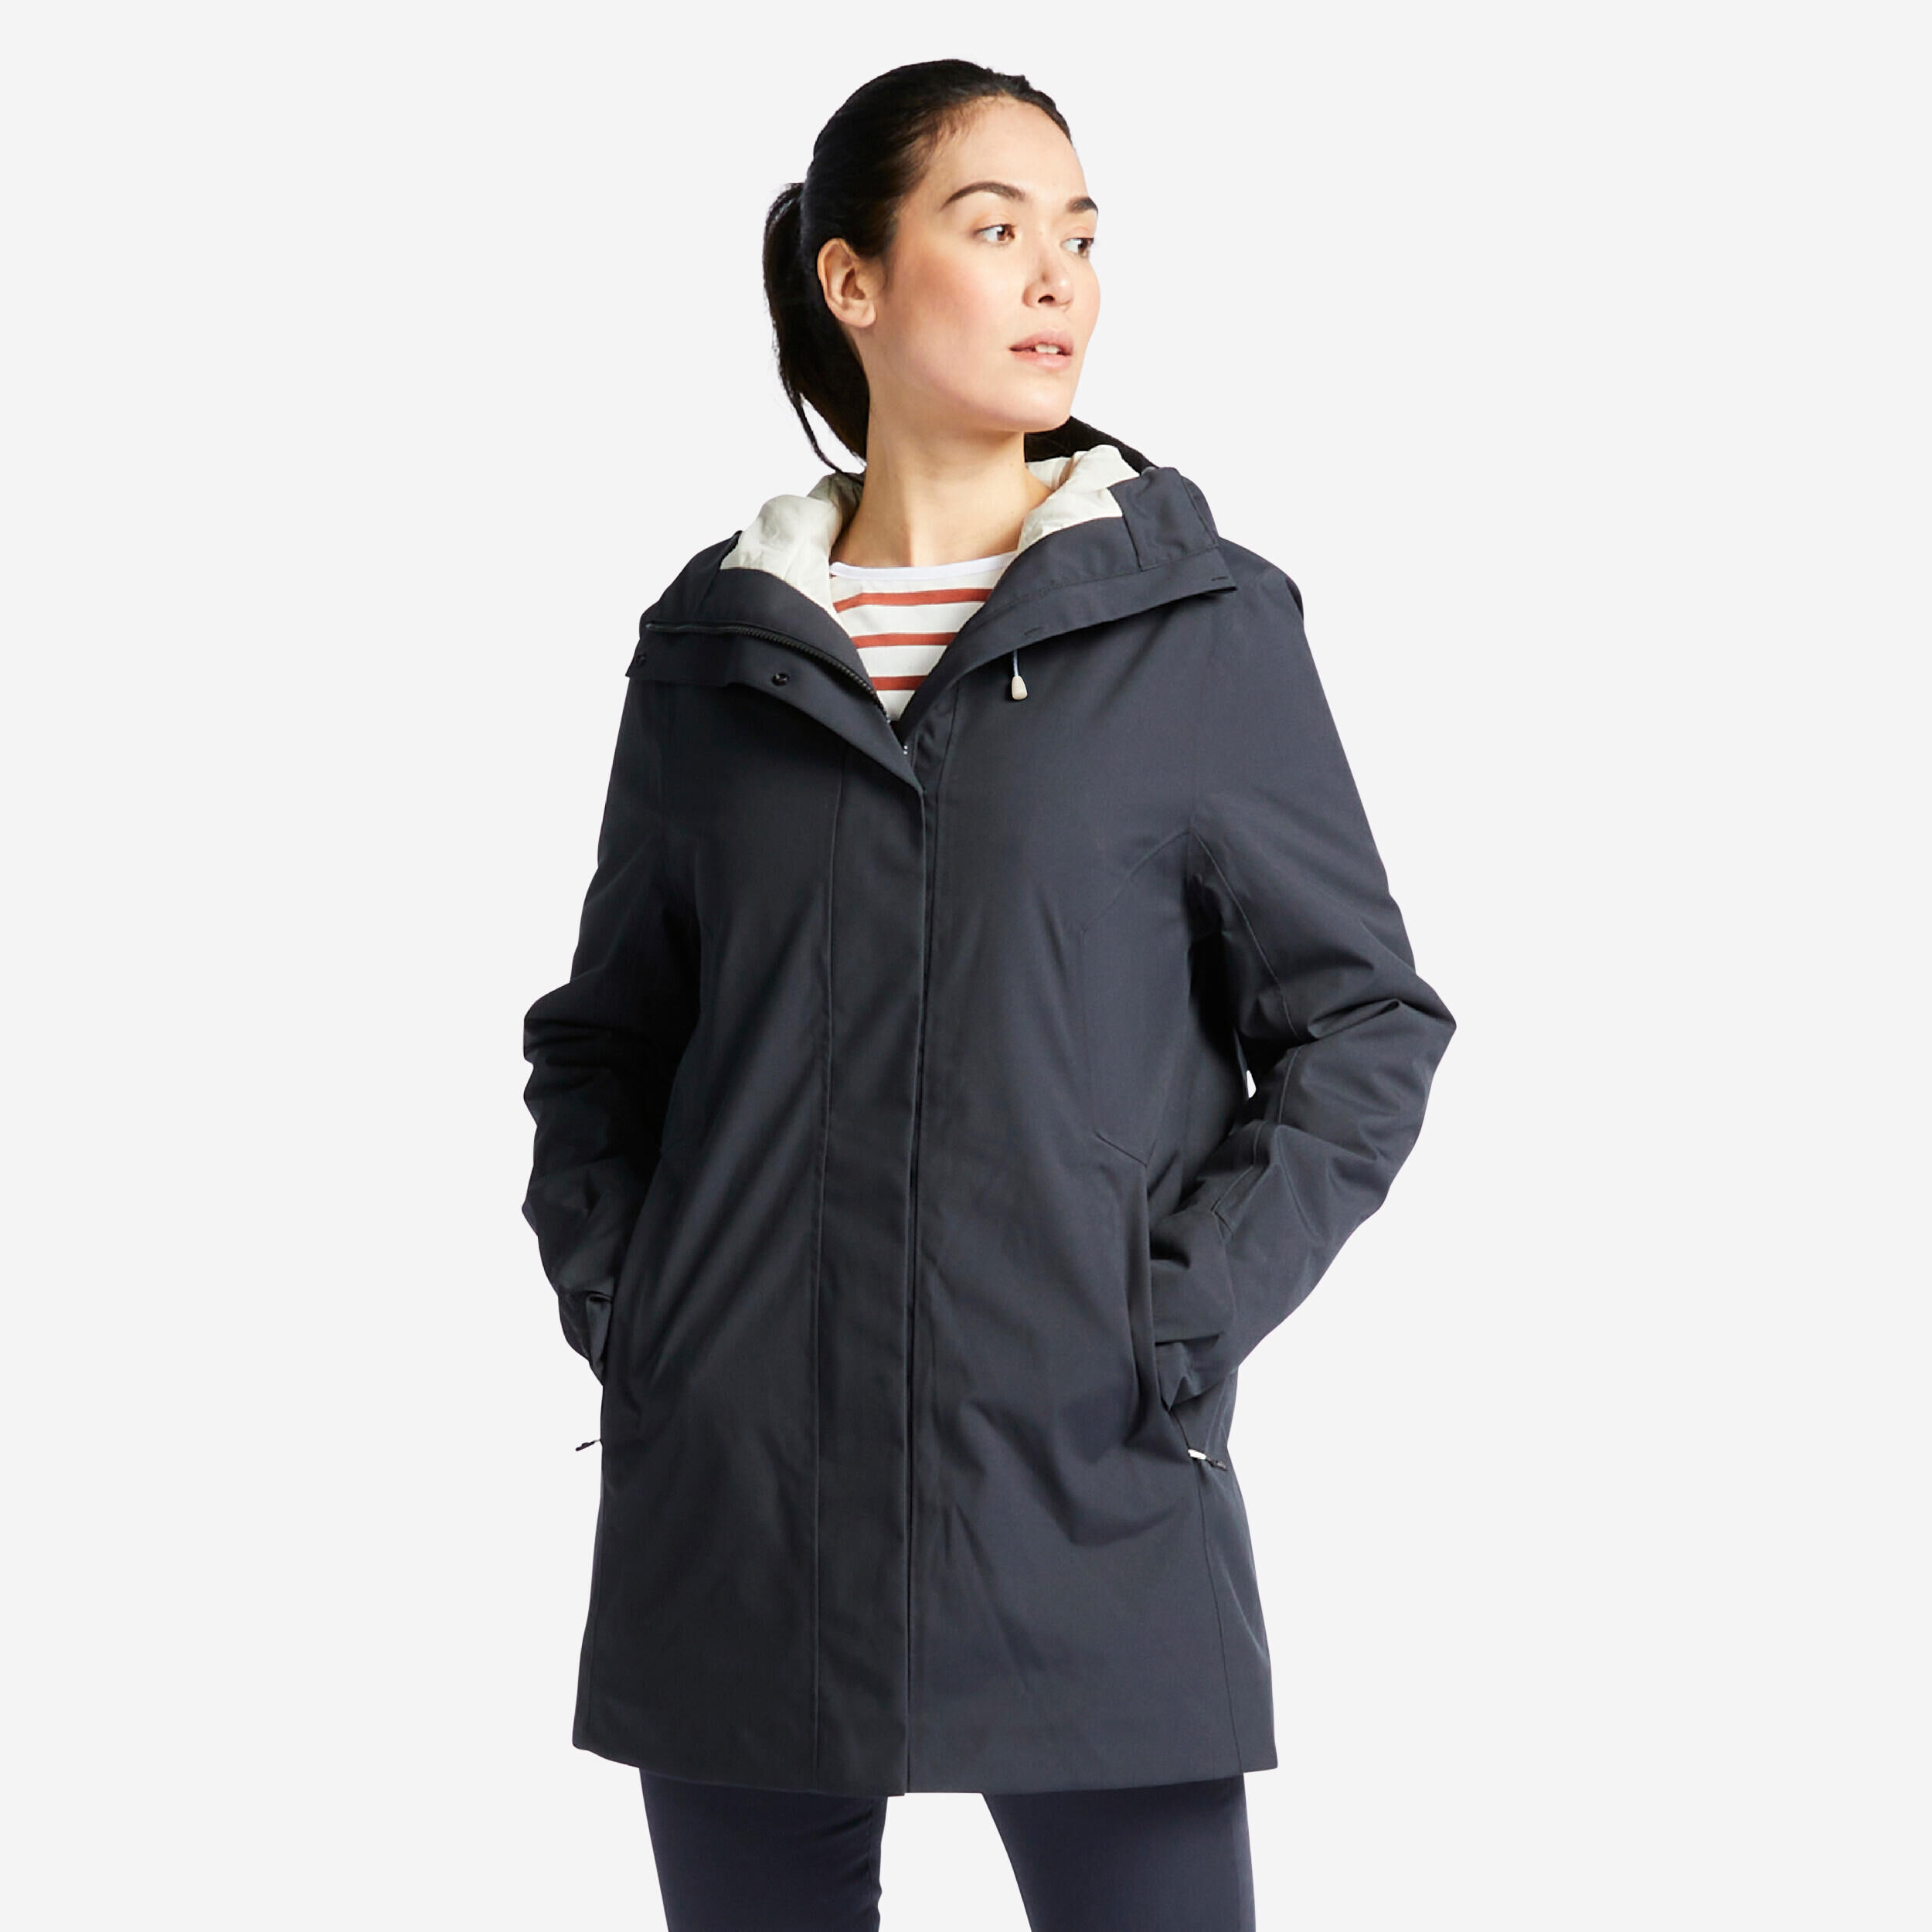 TRIBORD Women's Warm Waterproof Windproof Jacket SAILING 300 - Dark grey